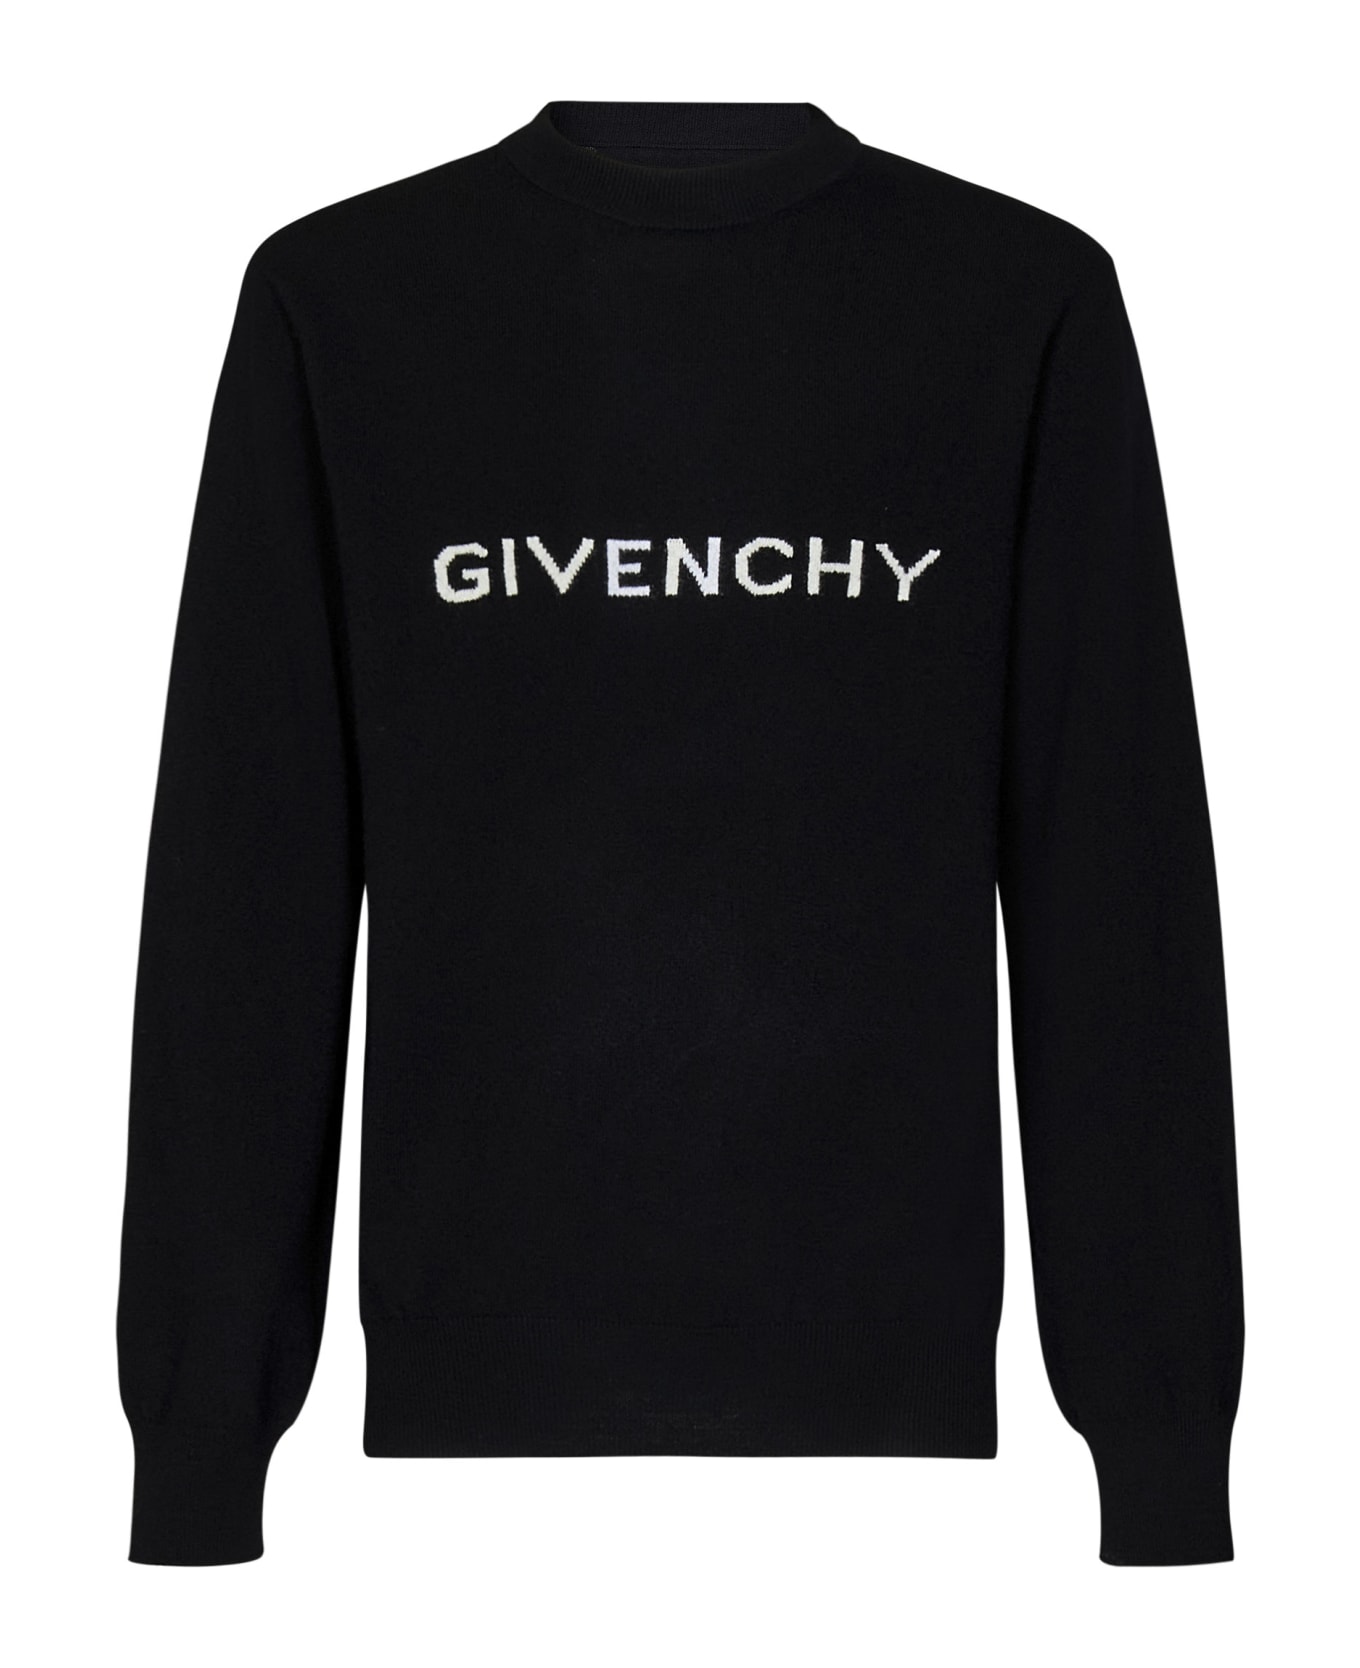 Givenchy Sweater - Black ニットウェア